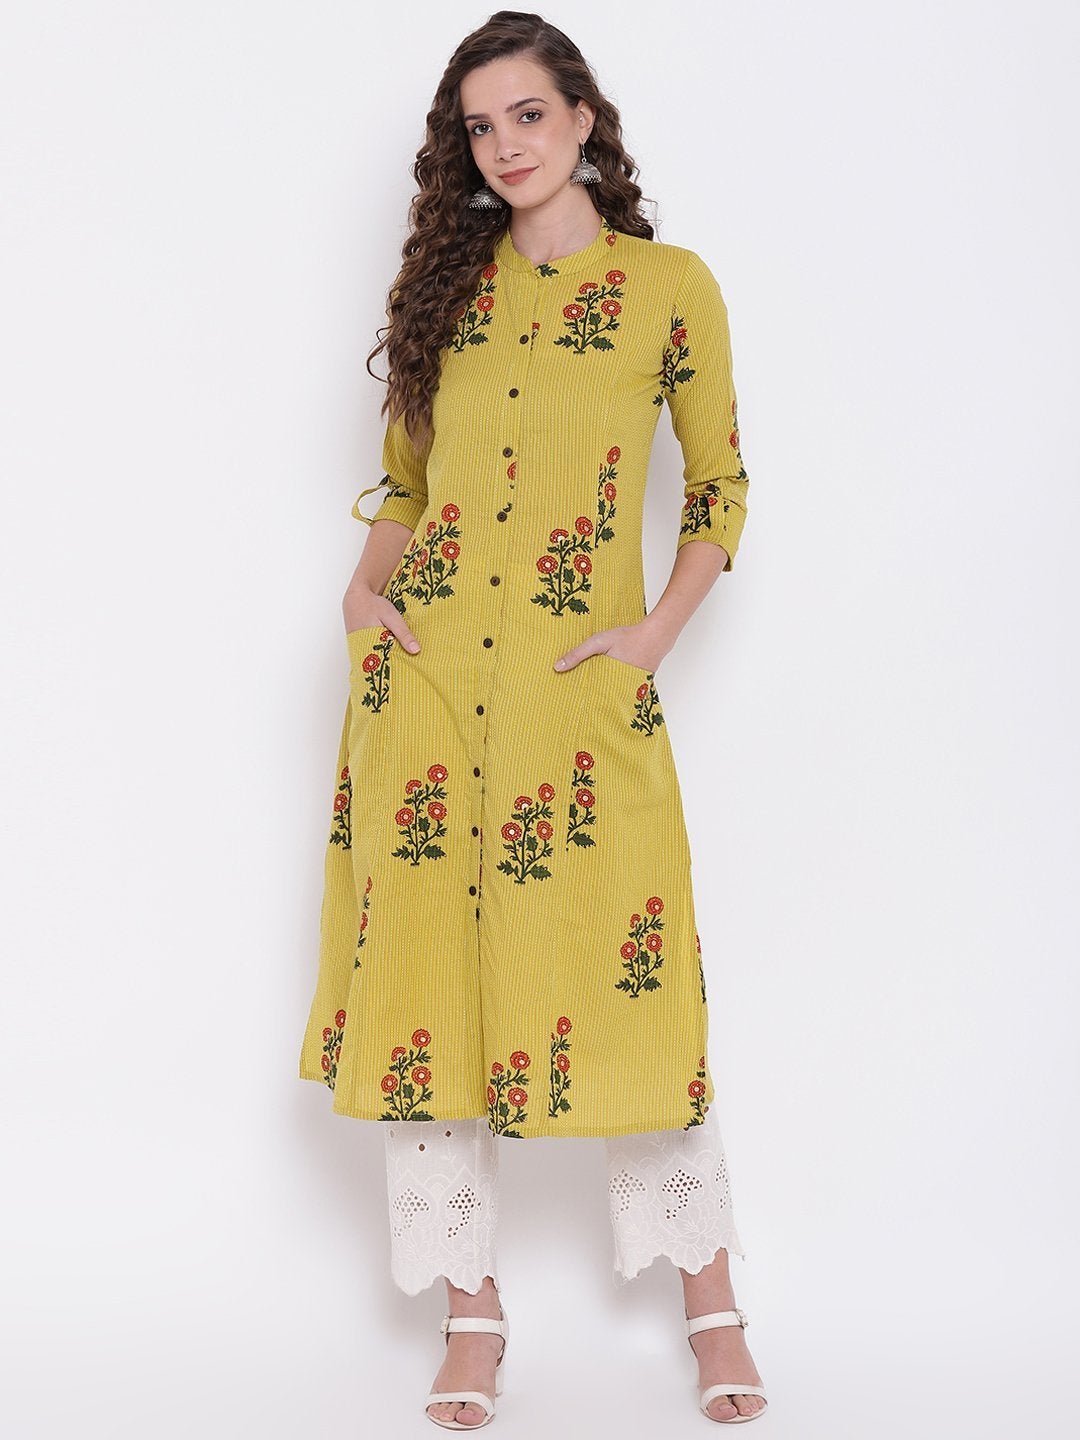 Lemon Yellow Colored Woolen Kurti with Resham work for women